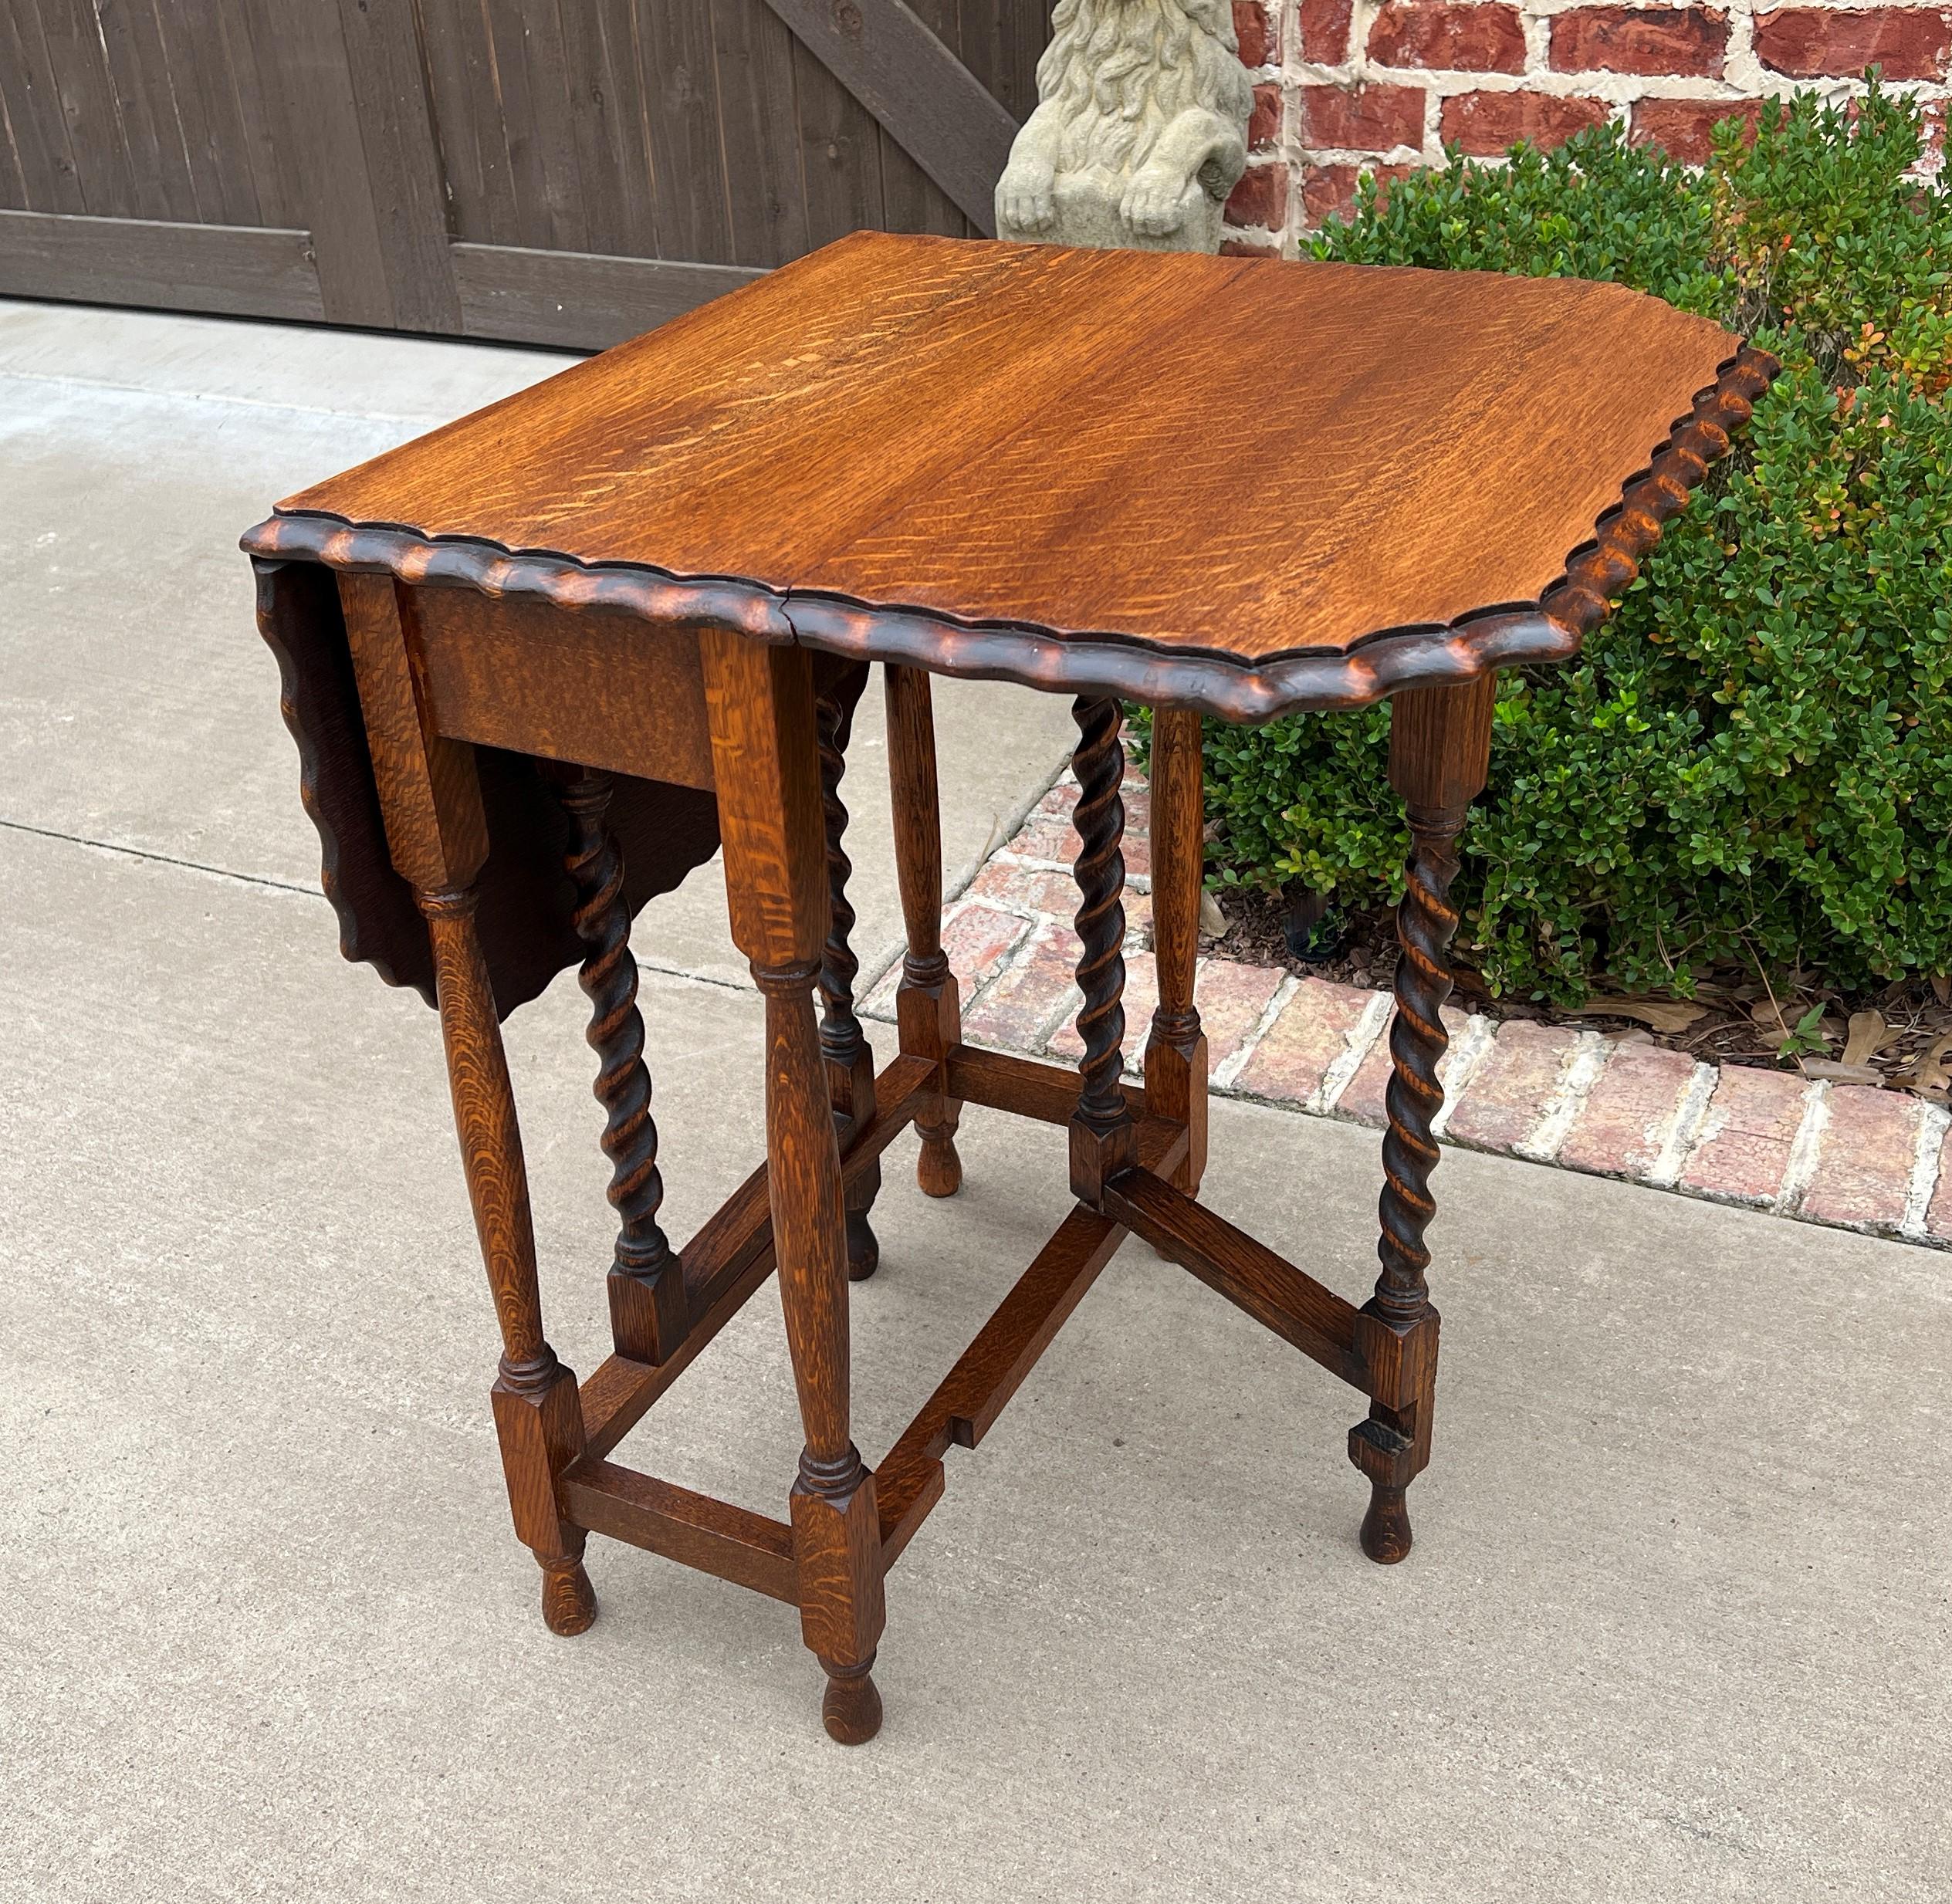 Carved Antique English Table Drop Leaf Gateleg Pie Crust Edge Oak Barley Twist Table For Sale